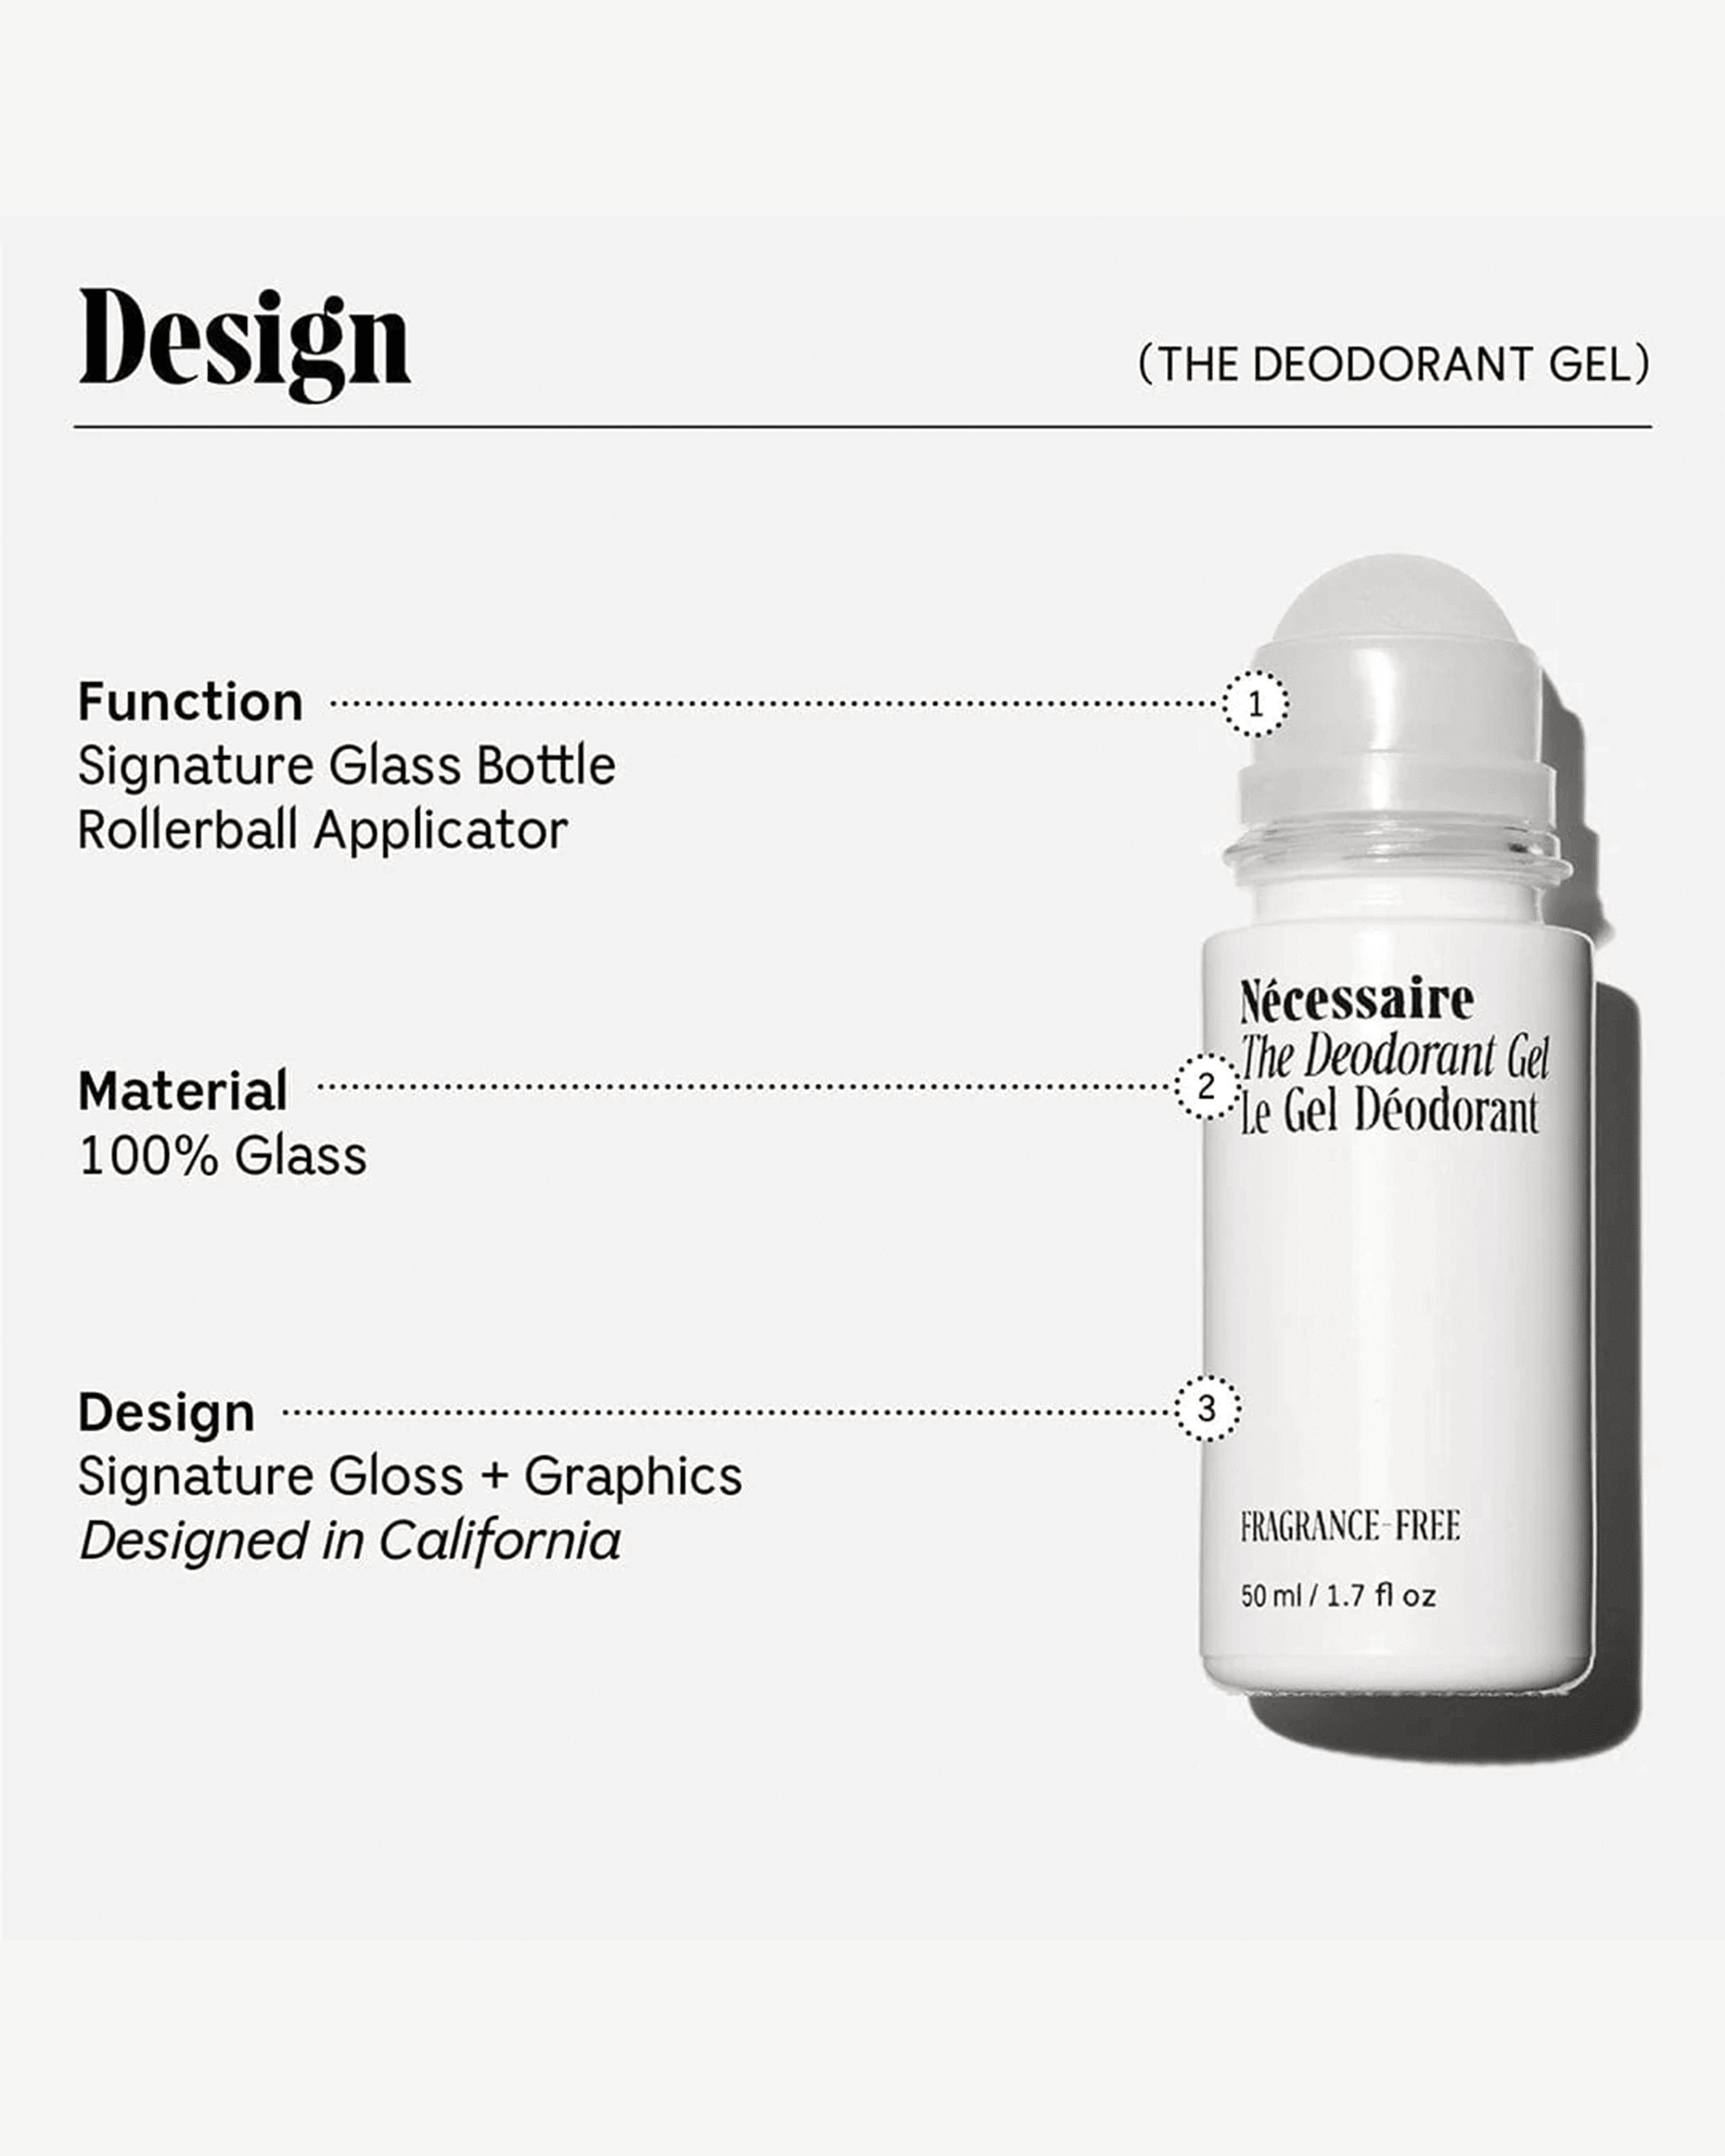 The Deodorant Gel - Fragrance-Free